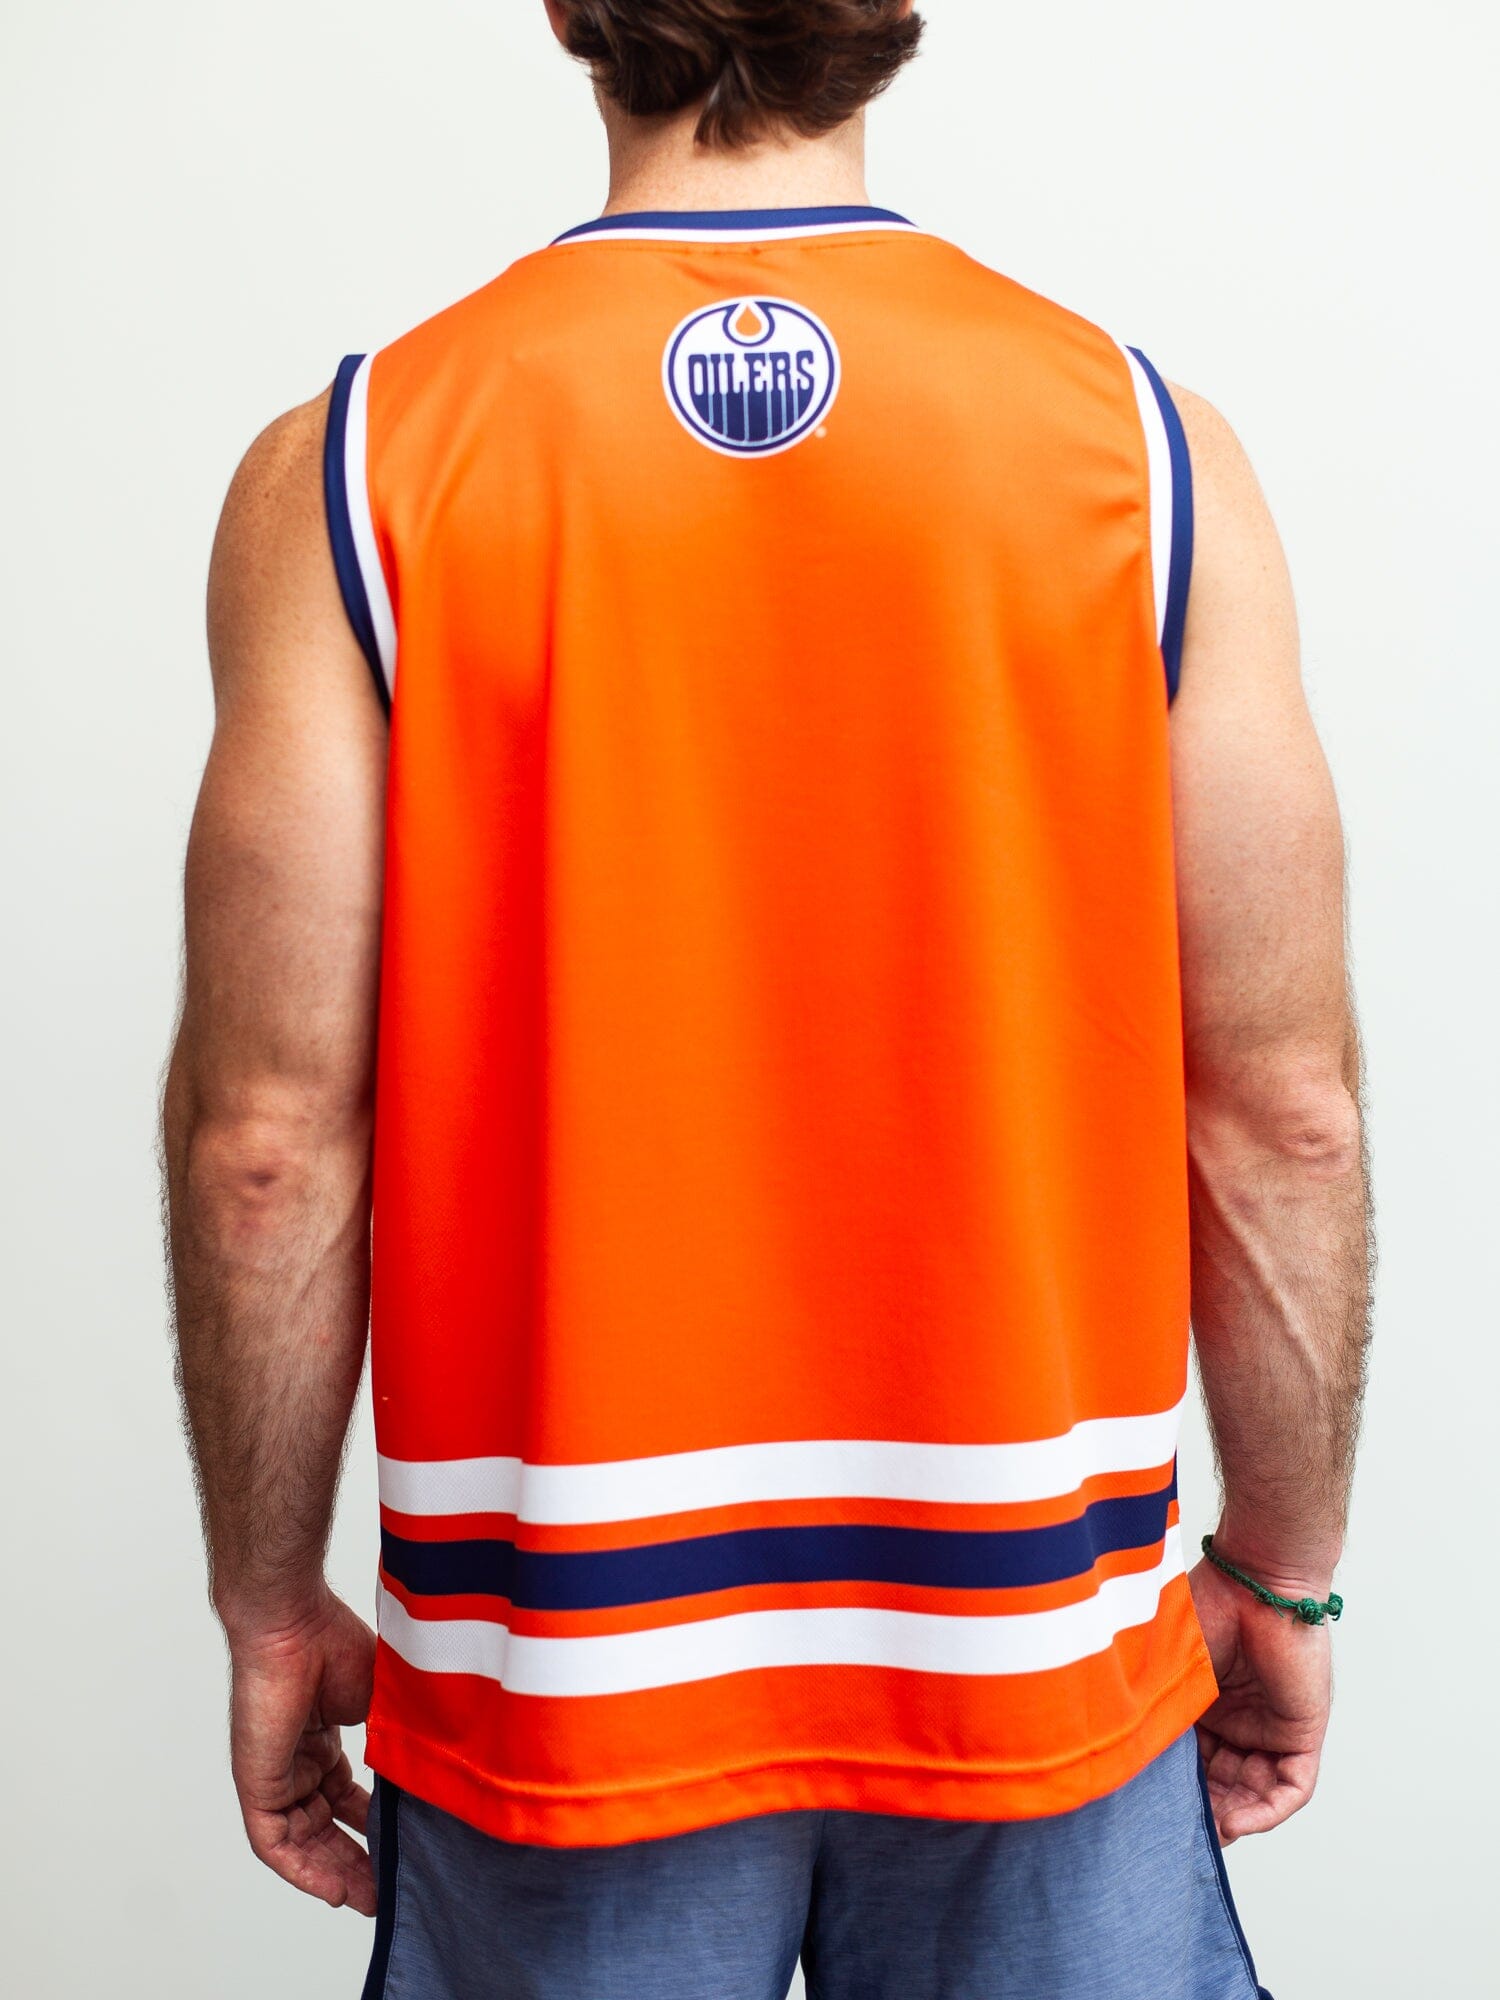 Edmonton Oilers Jersey For Youth, Women, or Men